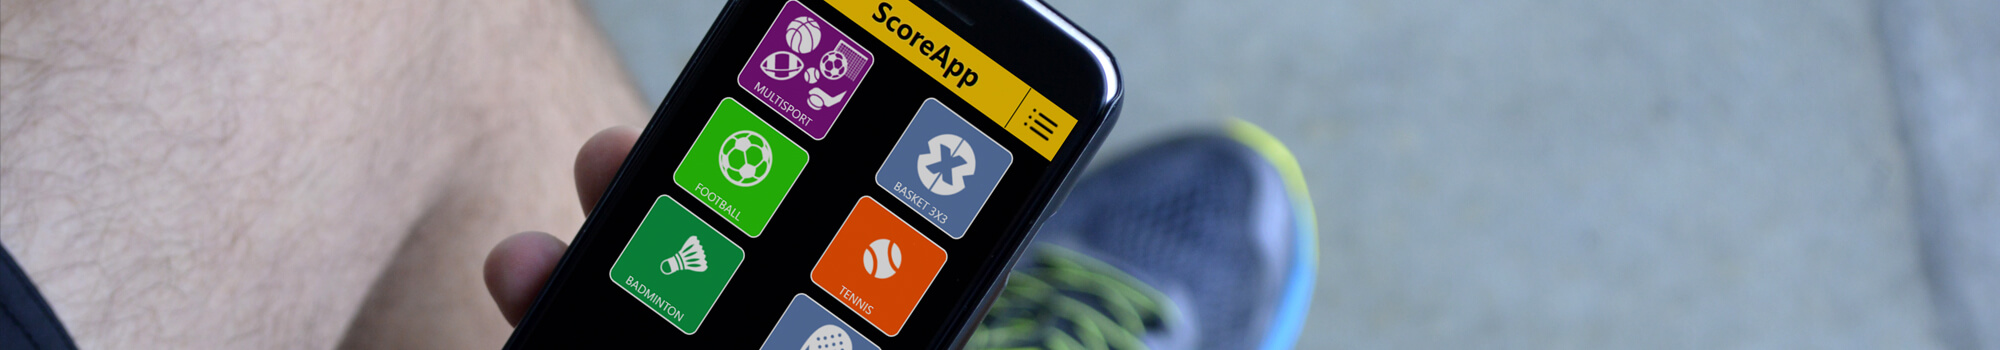 Application ScoreApp Affichage multisport